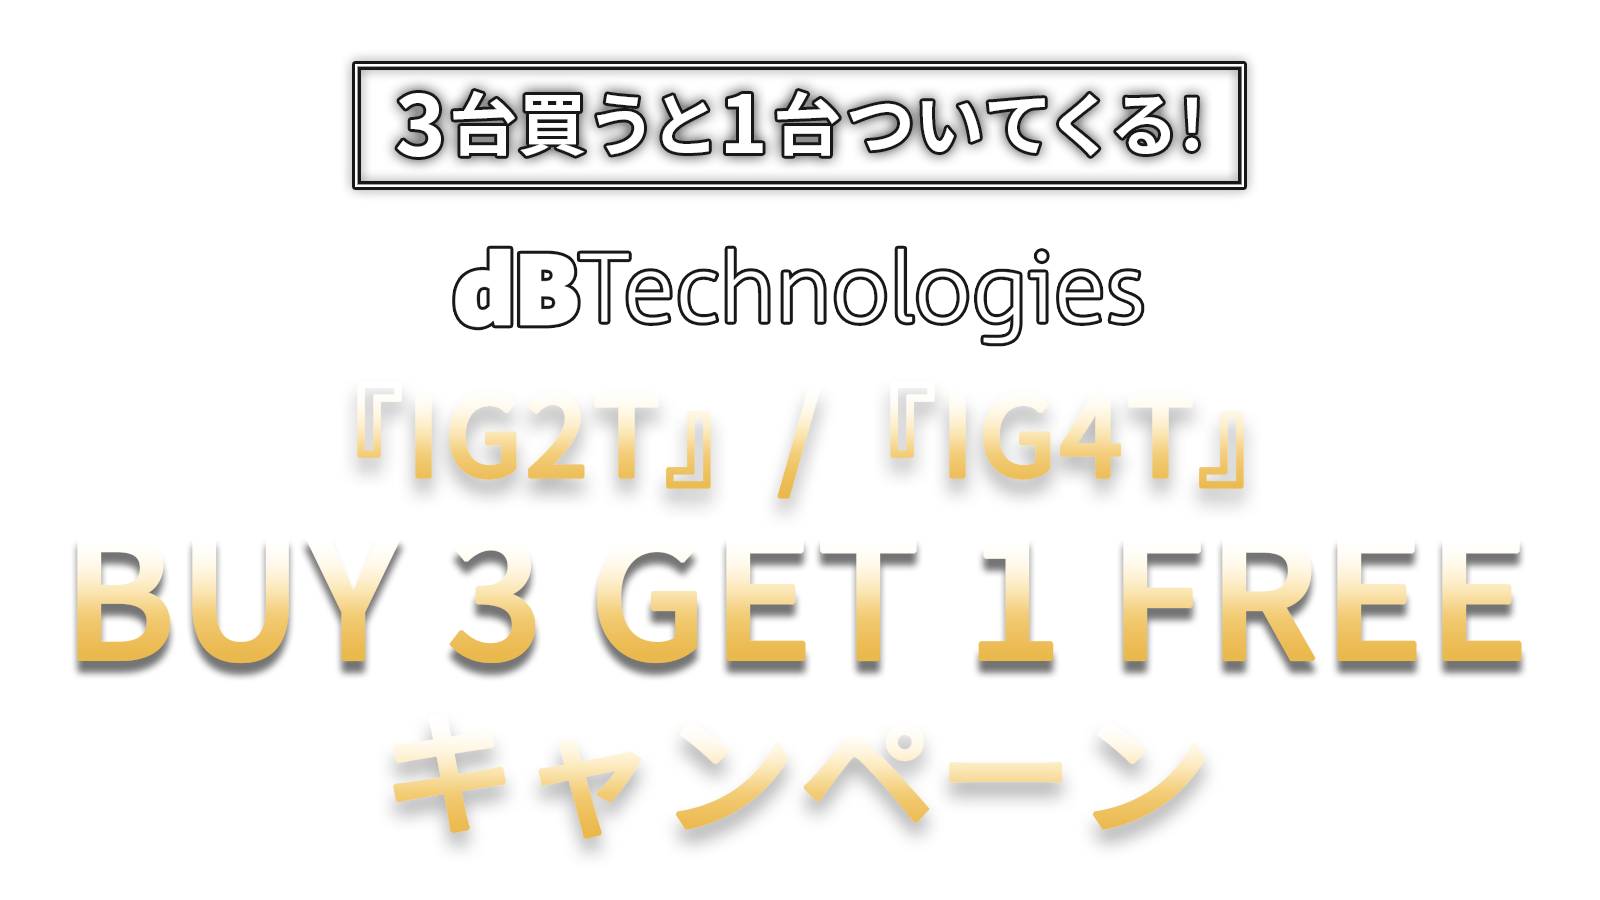 dBTechnologies 『IG2T』/『IG4T』 BUY 3 GET 1 FREE キャンペーン